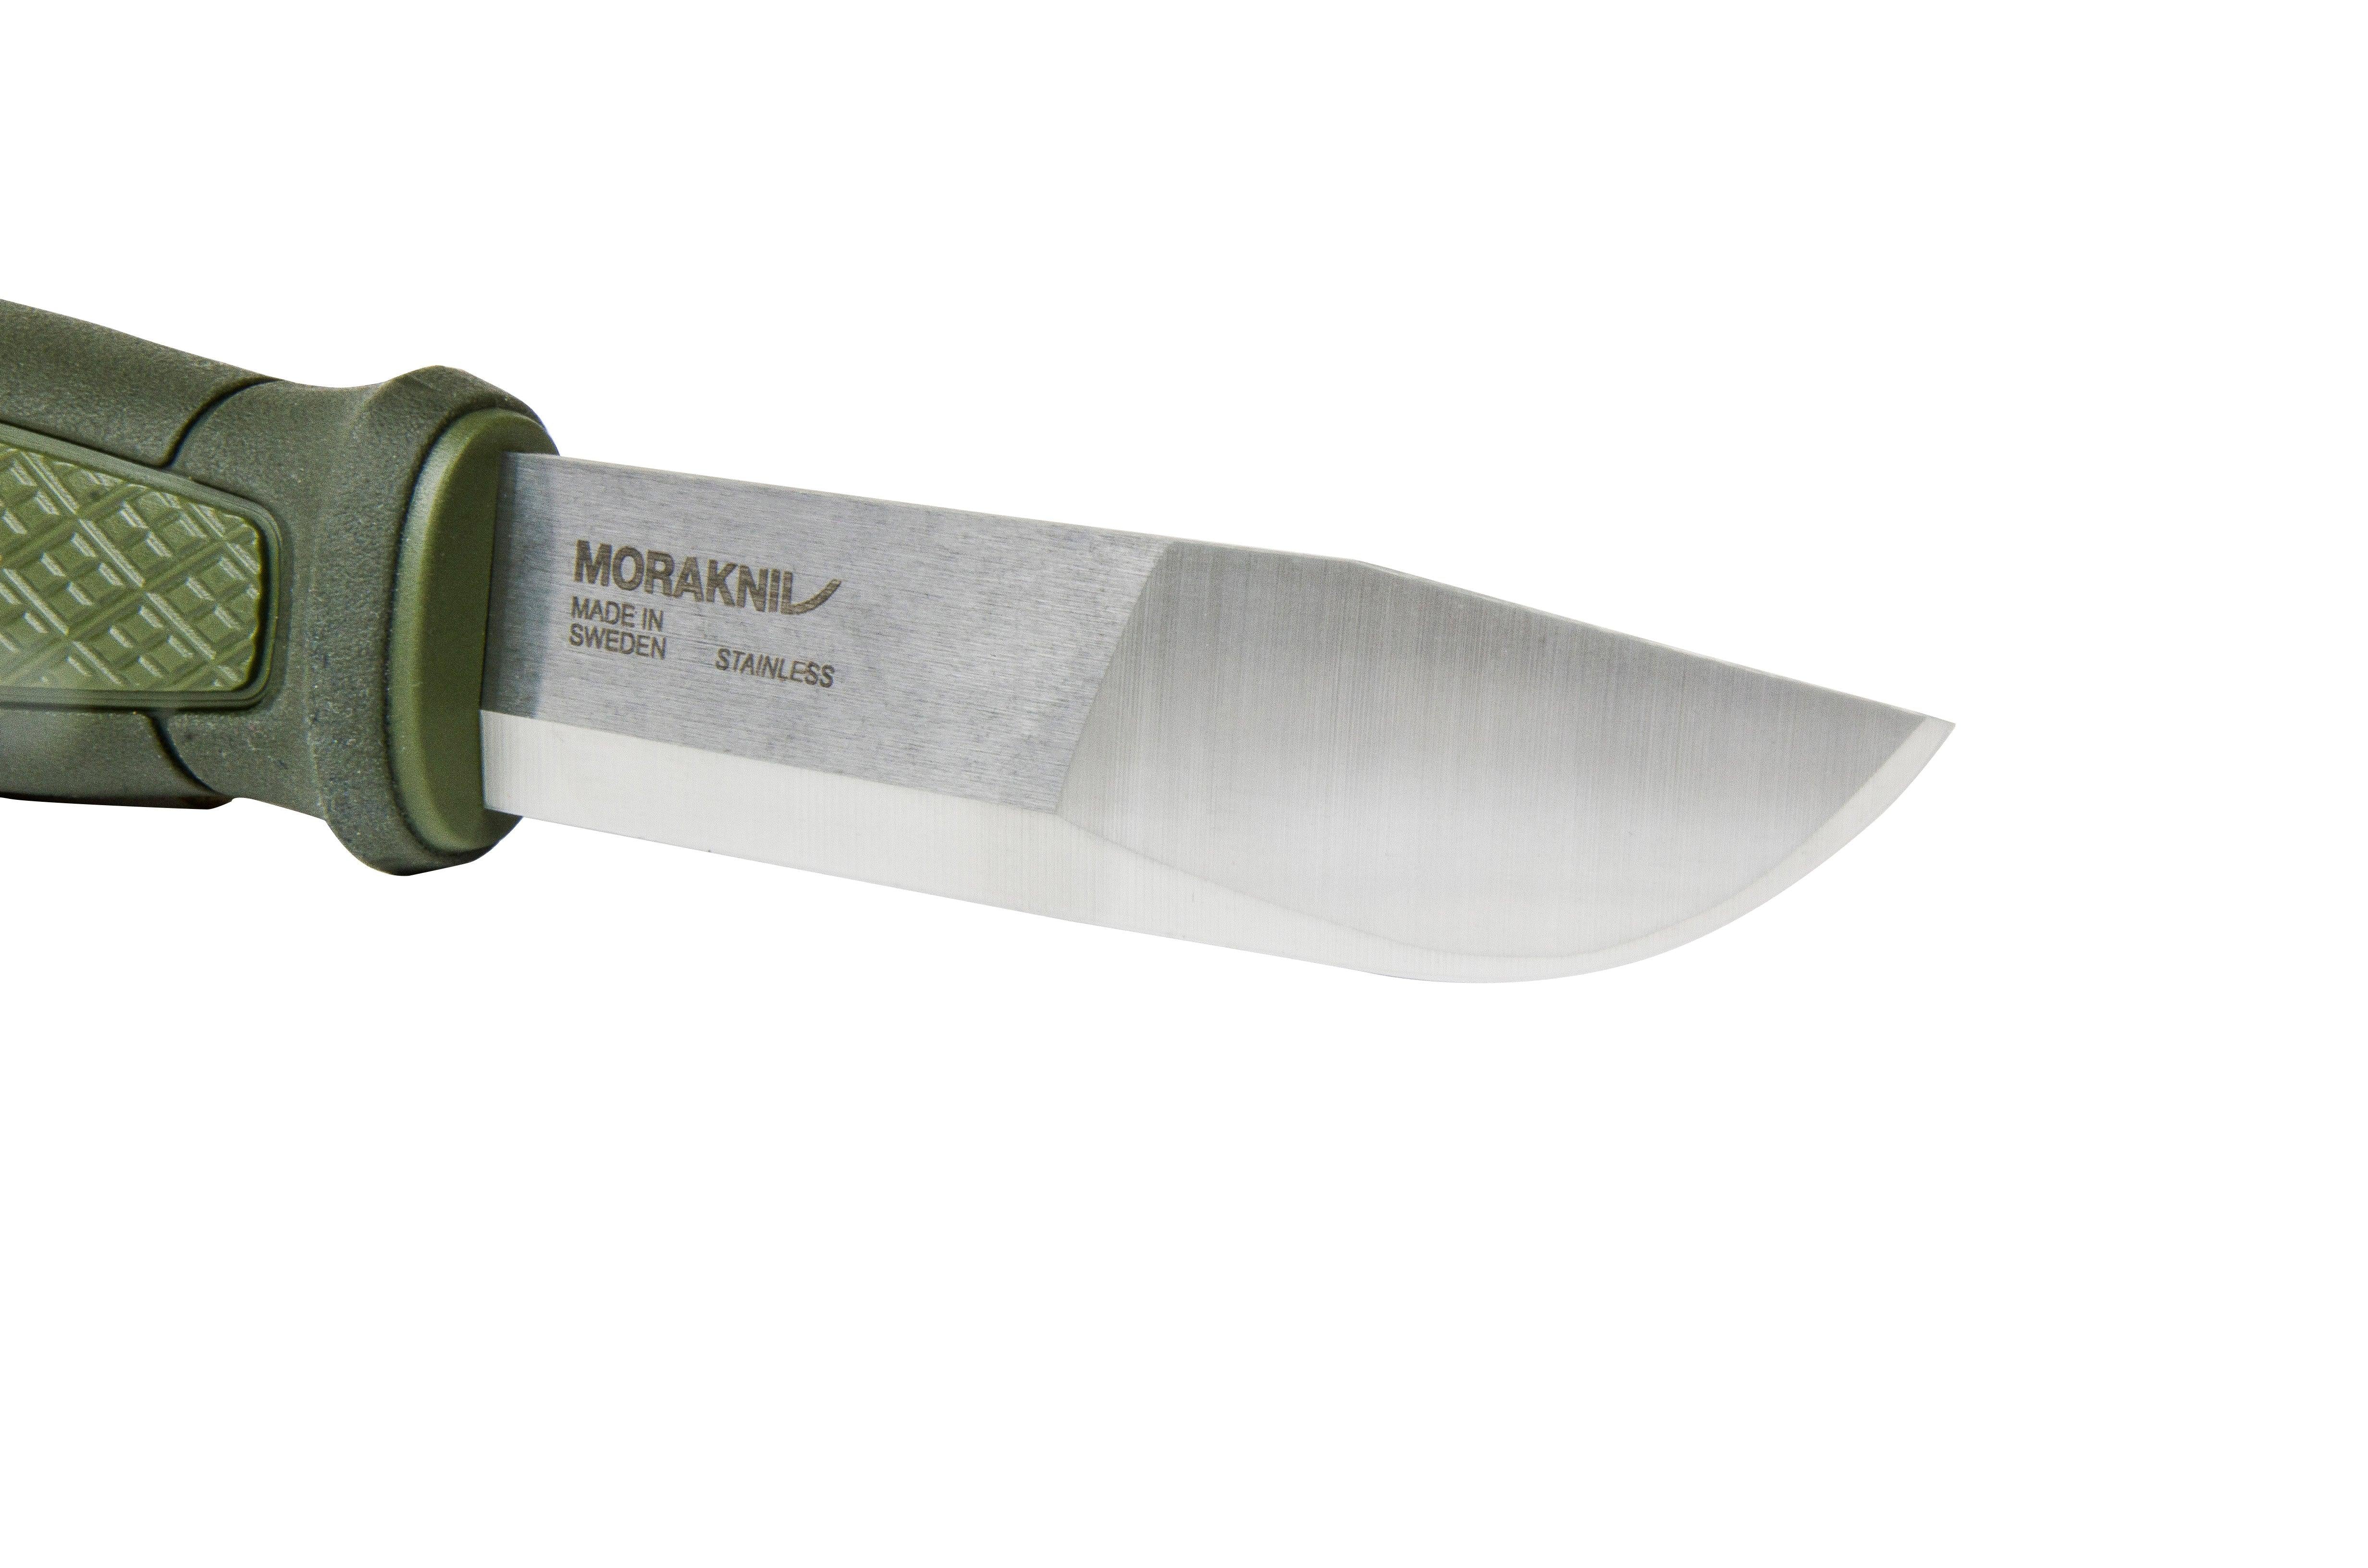 Morakniv�� Kansbol Stainless Knife with Plastic Sheath - Trusted Gear Company LLC